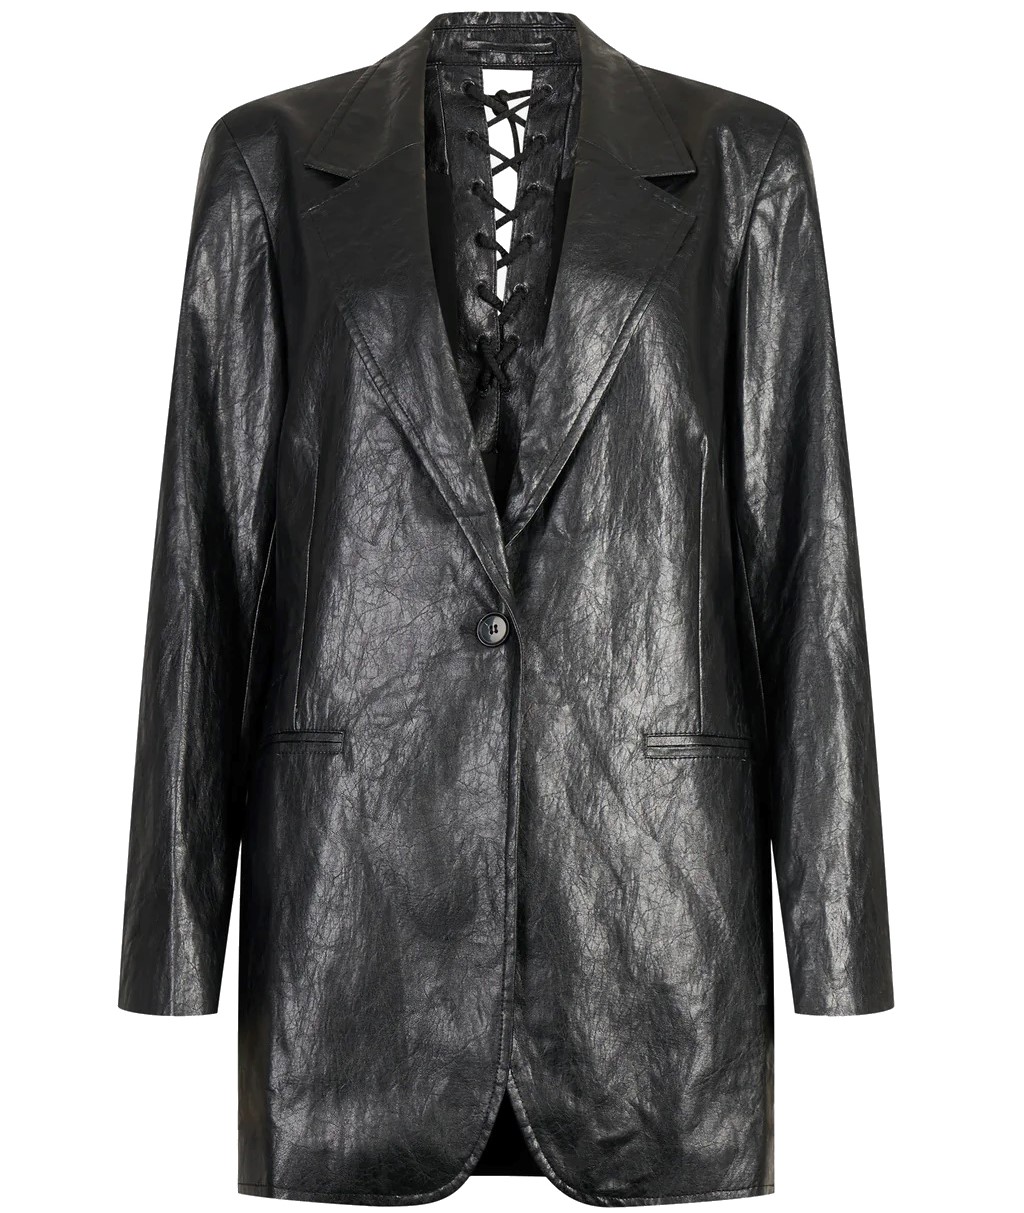 LALA BERLIN Jacket Jayden in Black S